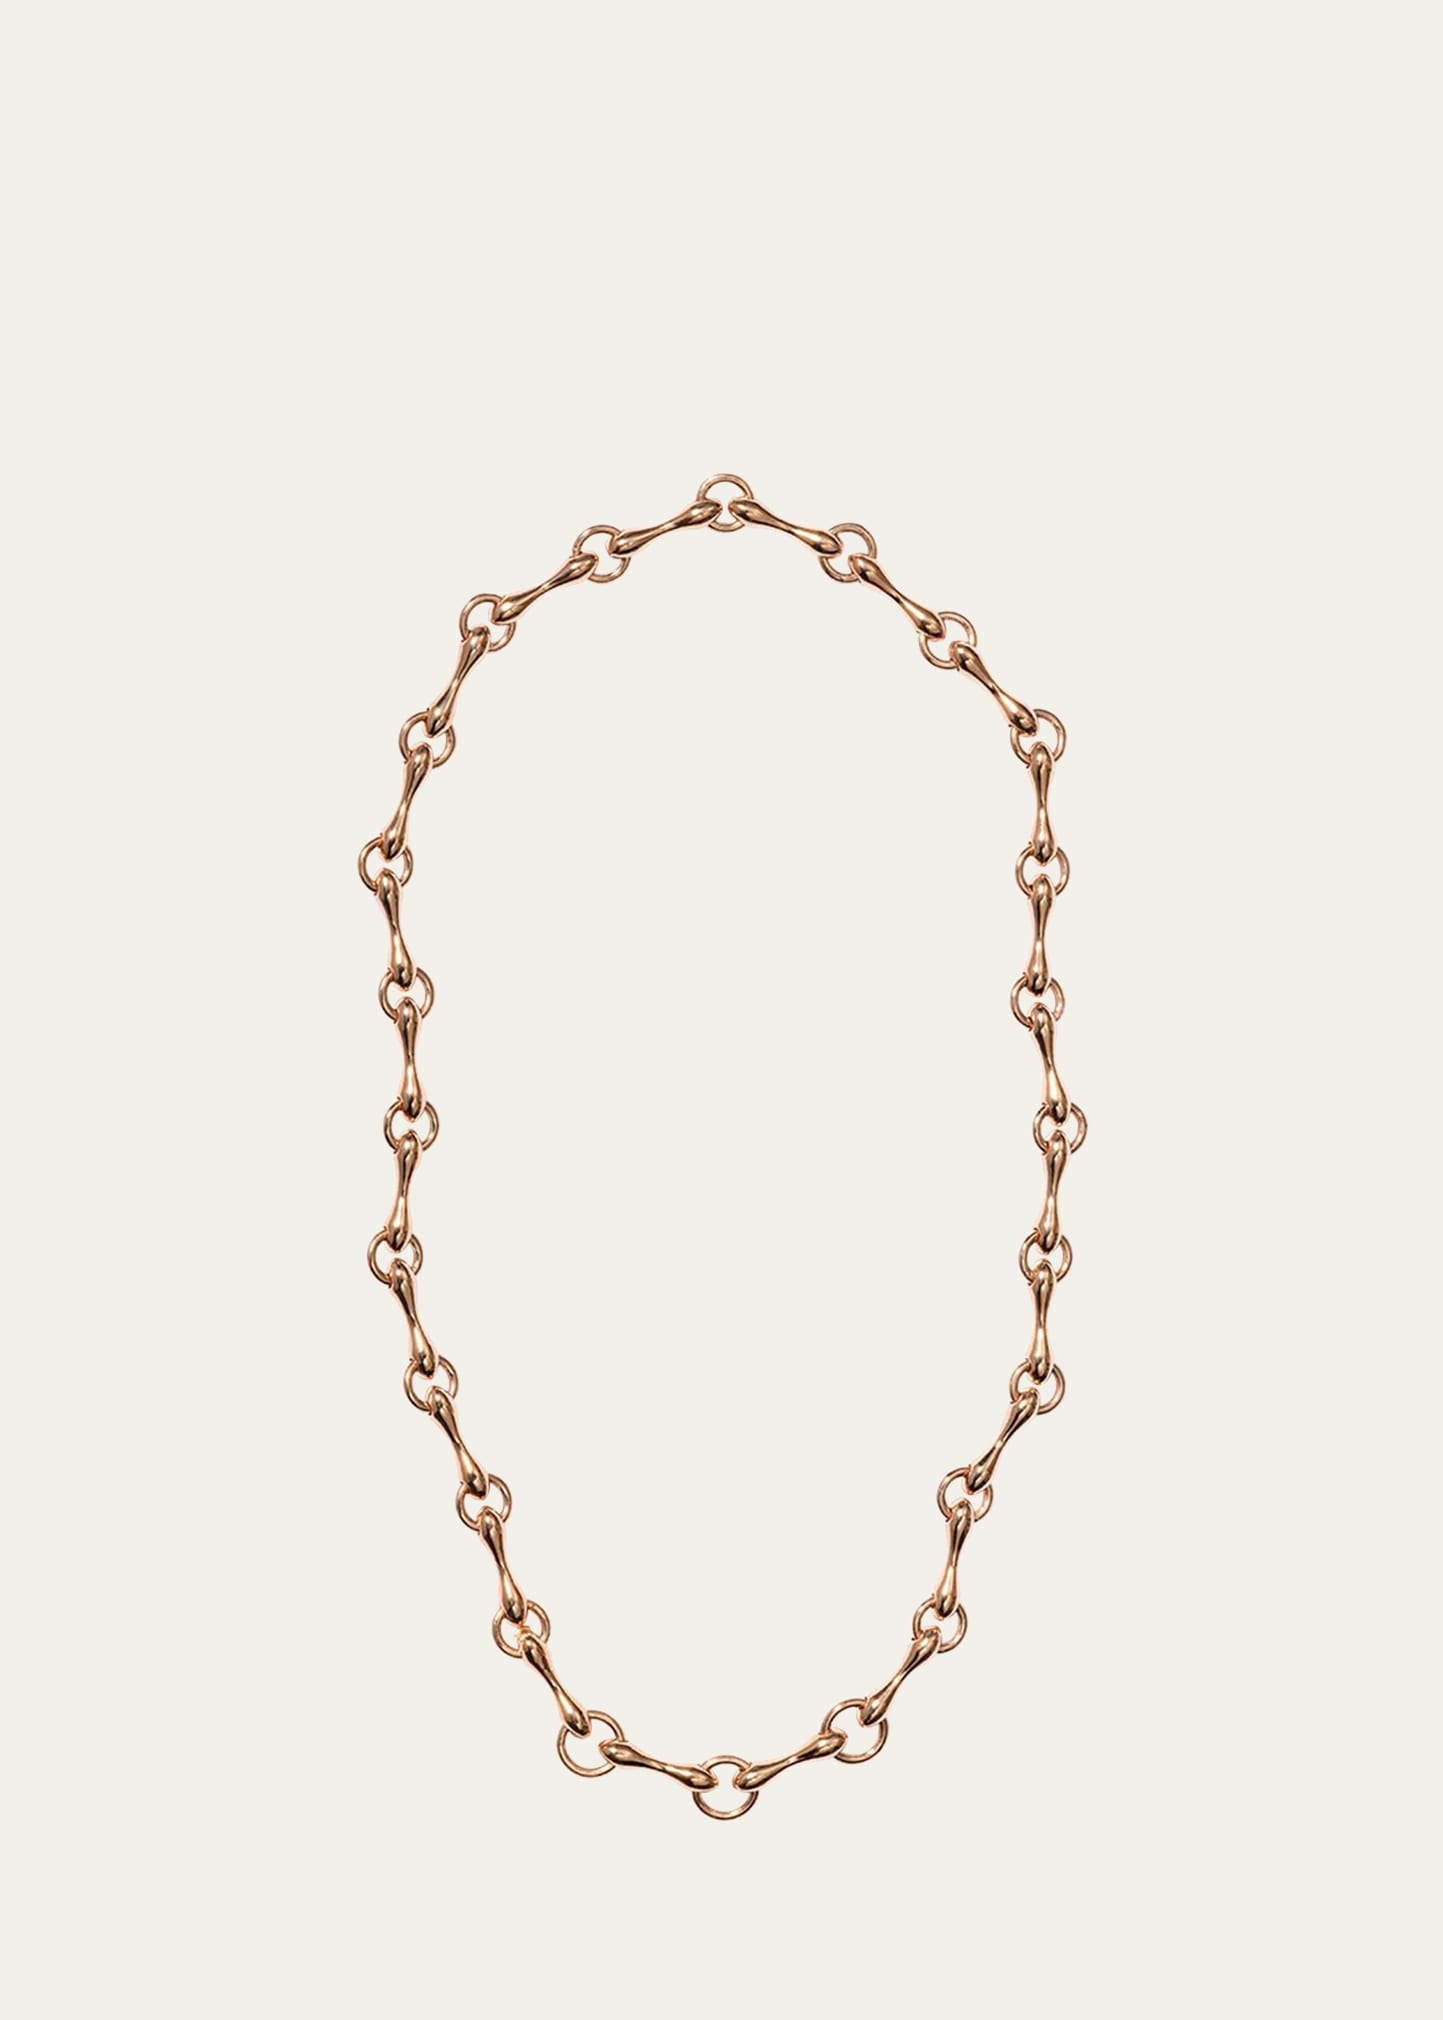 20K Rose Gold Heavy Baton Necklace, 16.5"L